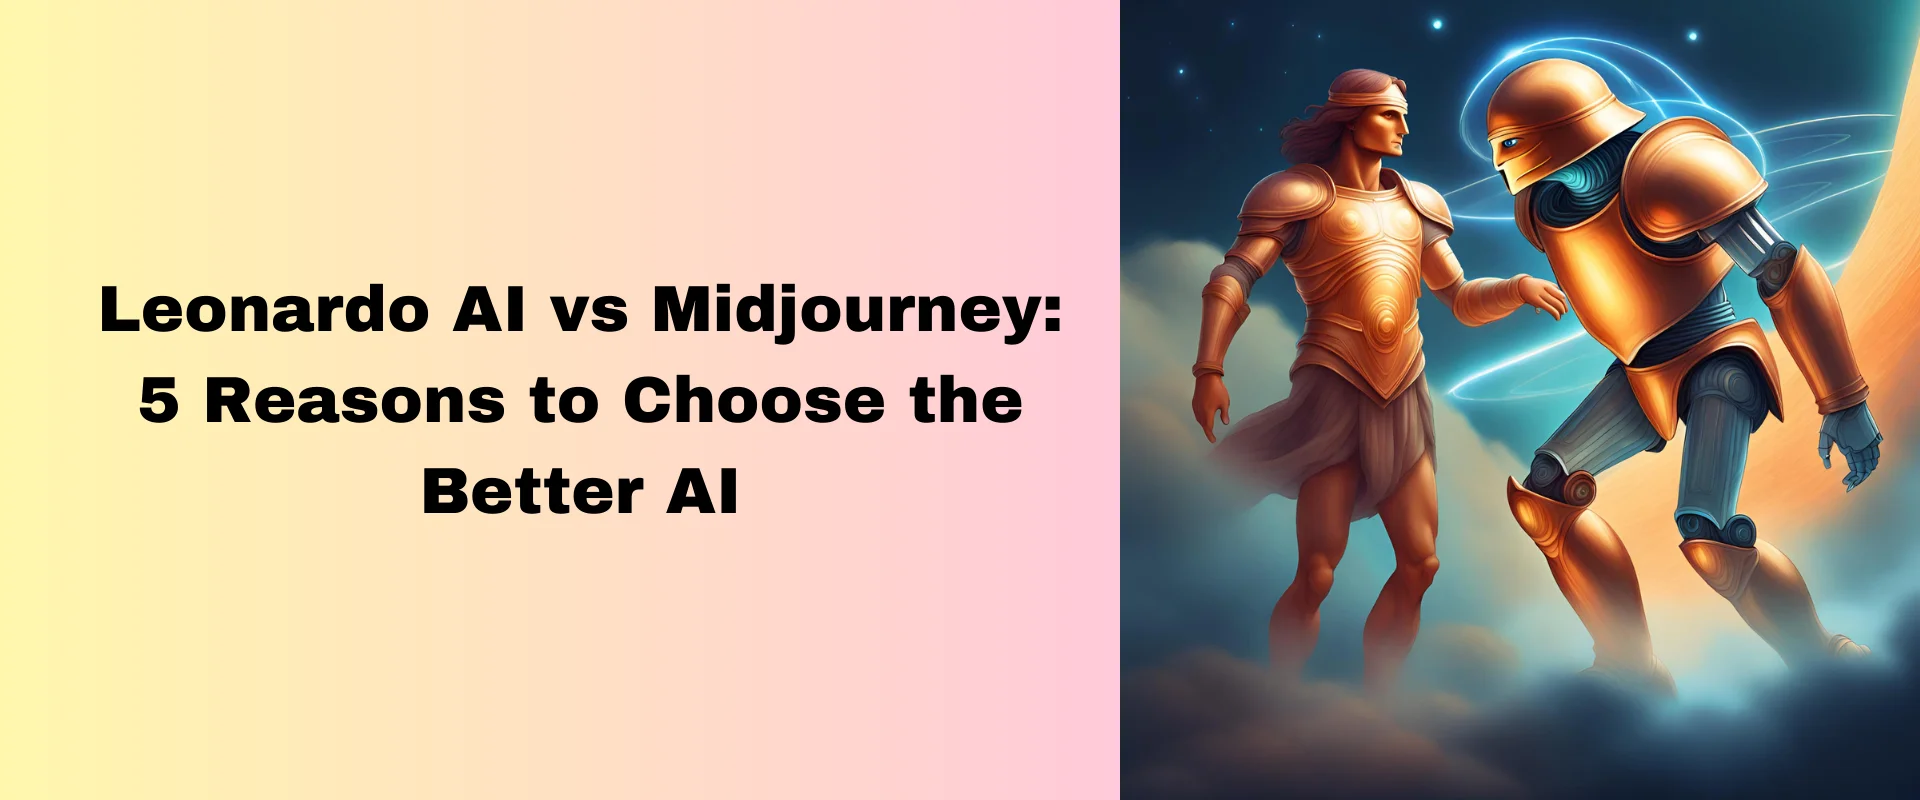 Leonardo AI vs Midjourney: 5 Reasons to Choose the Better AI